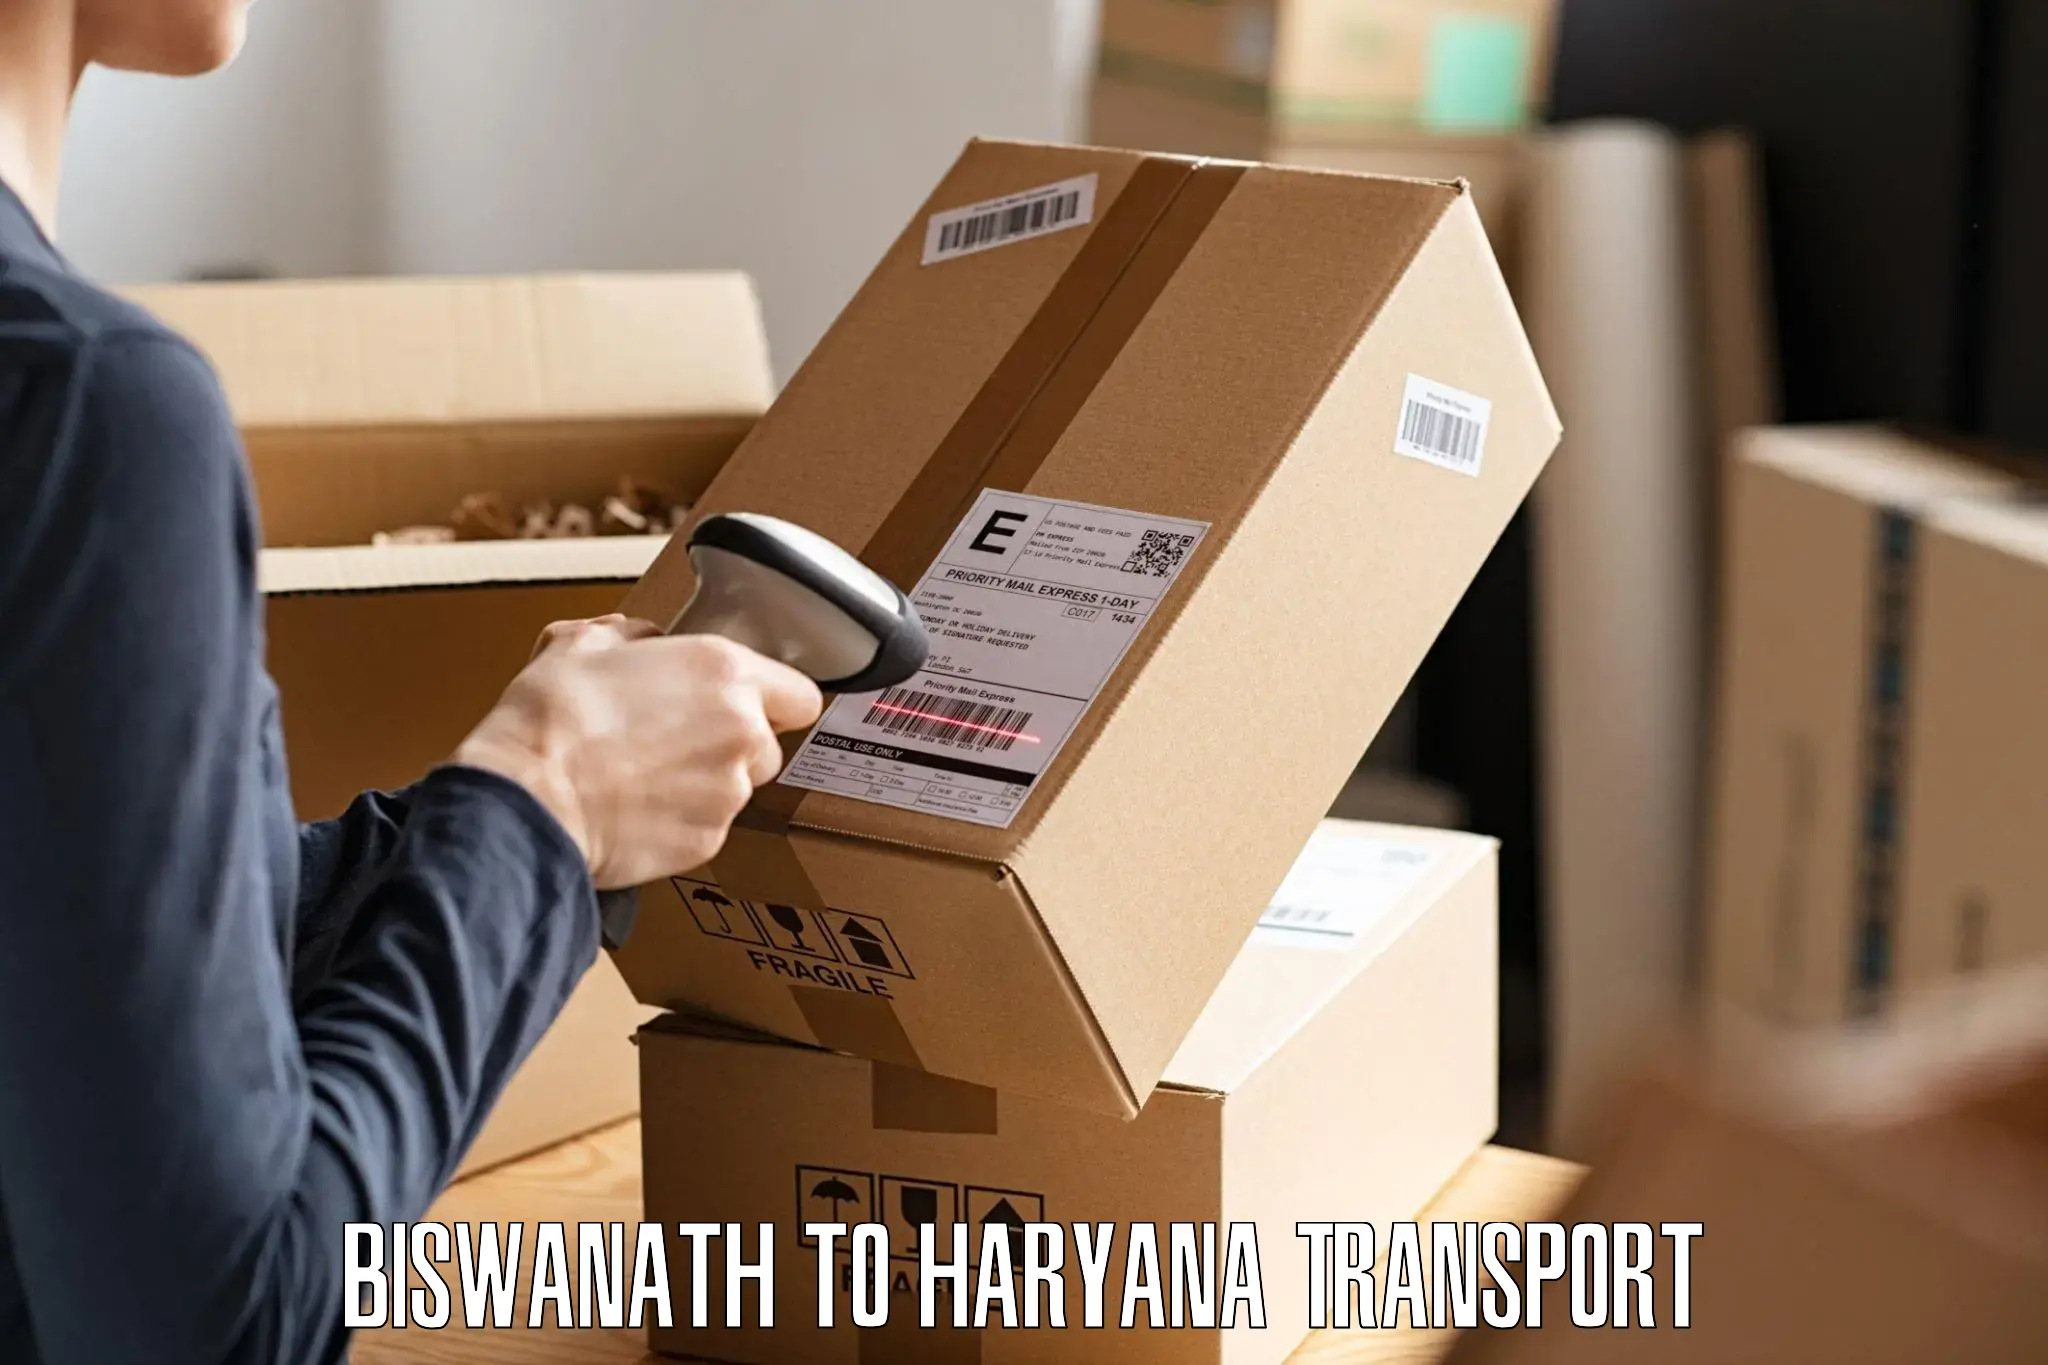 Express transport services Biswanath to Bilaspur Haryana